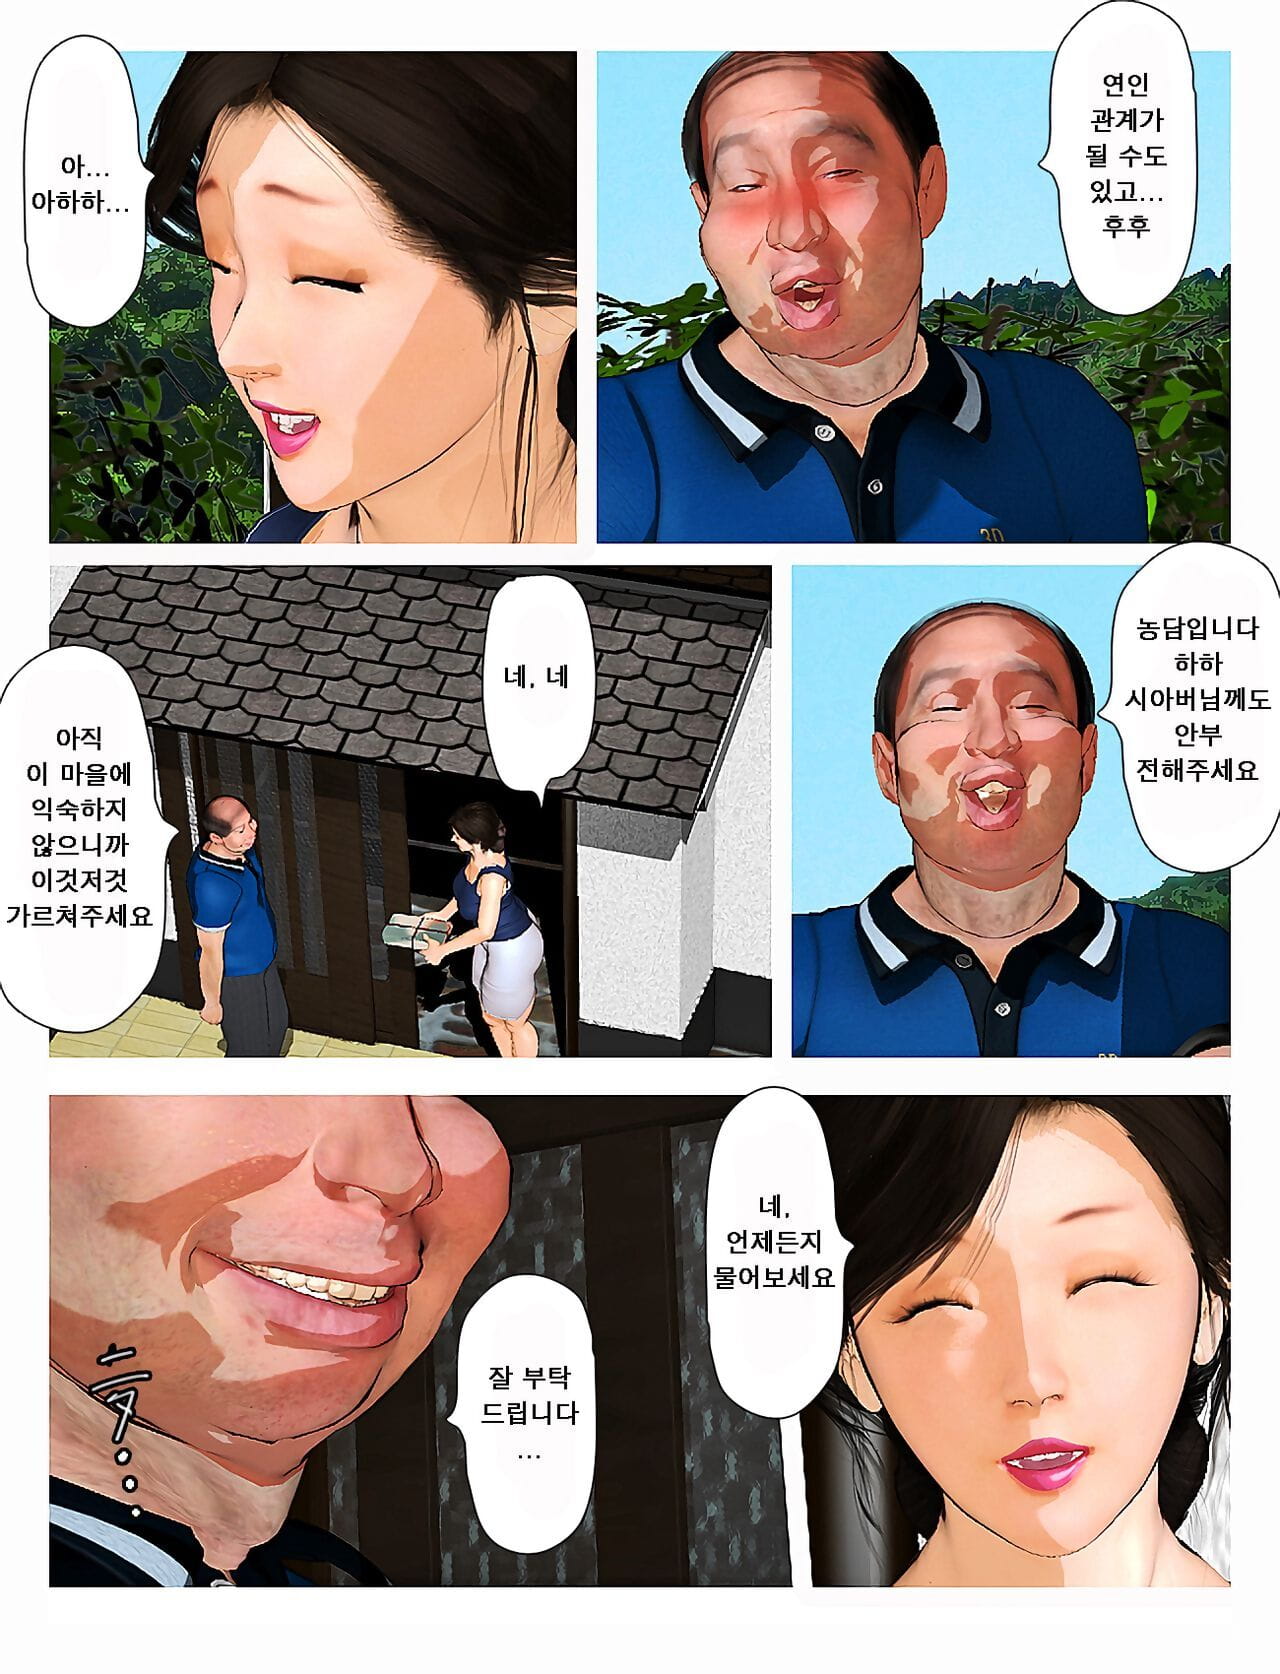 Kyou keine misako san 2019:2 오늘의 미사코씨 2019:2 page 1